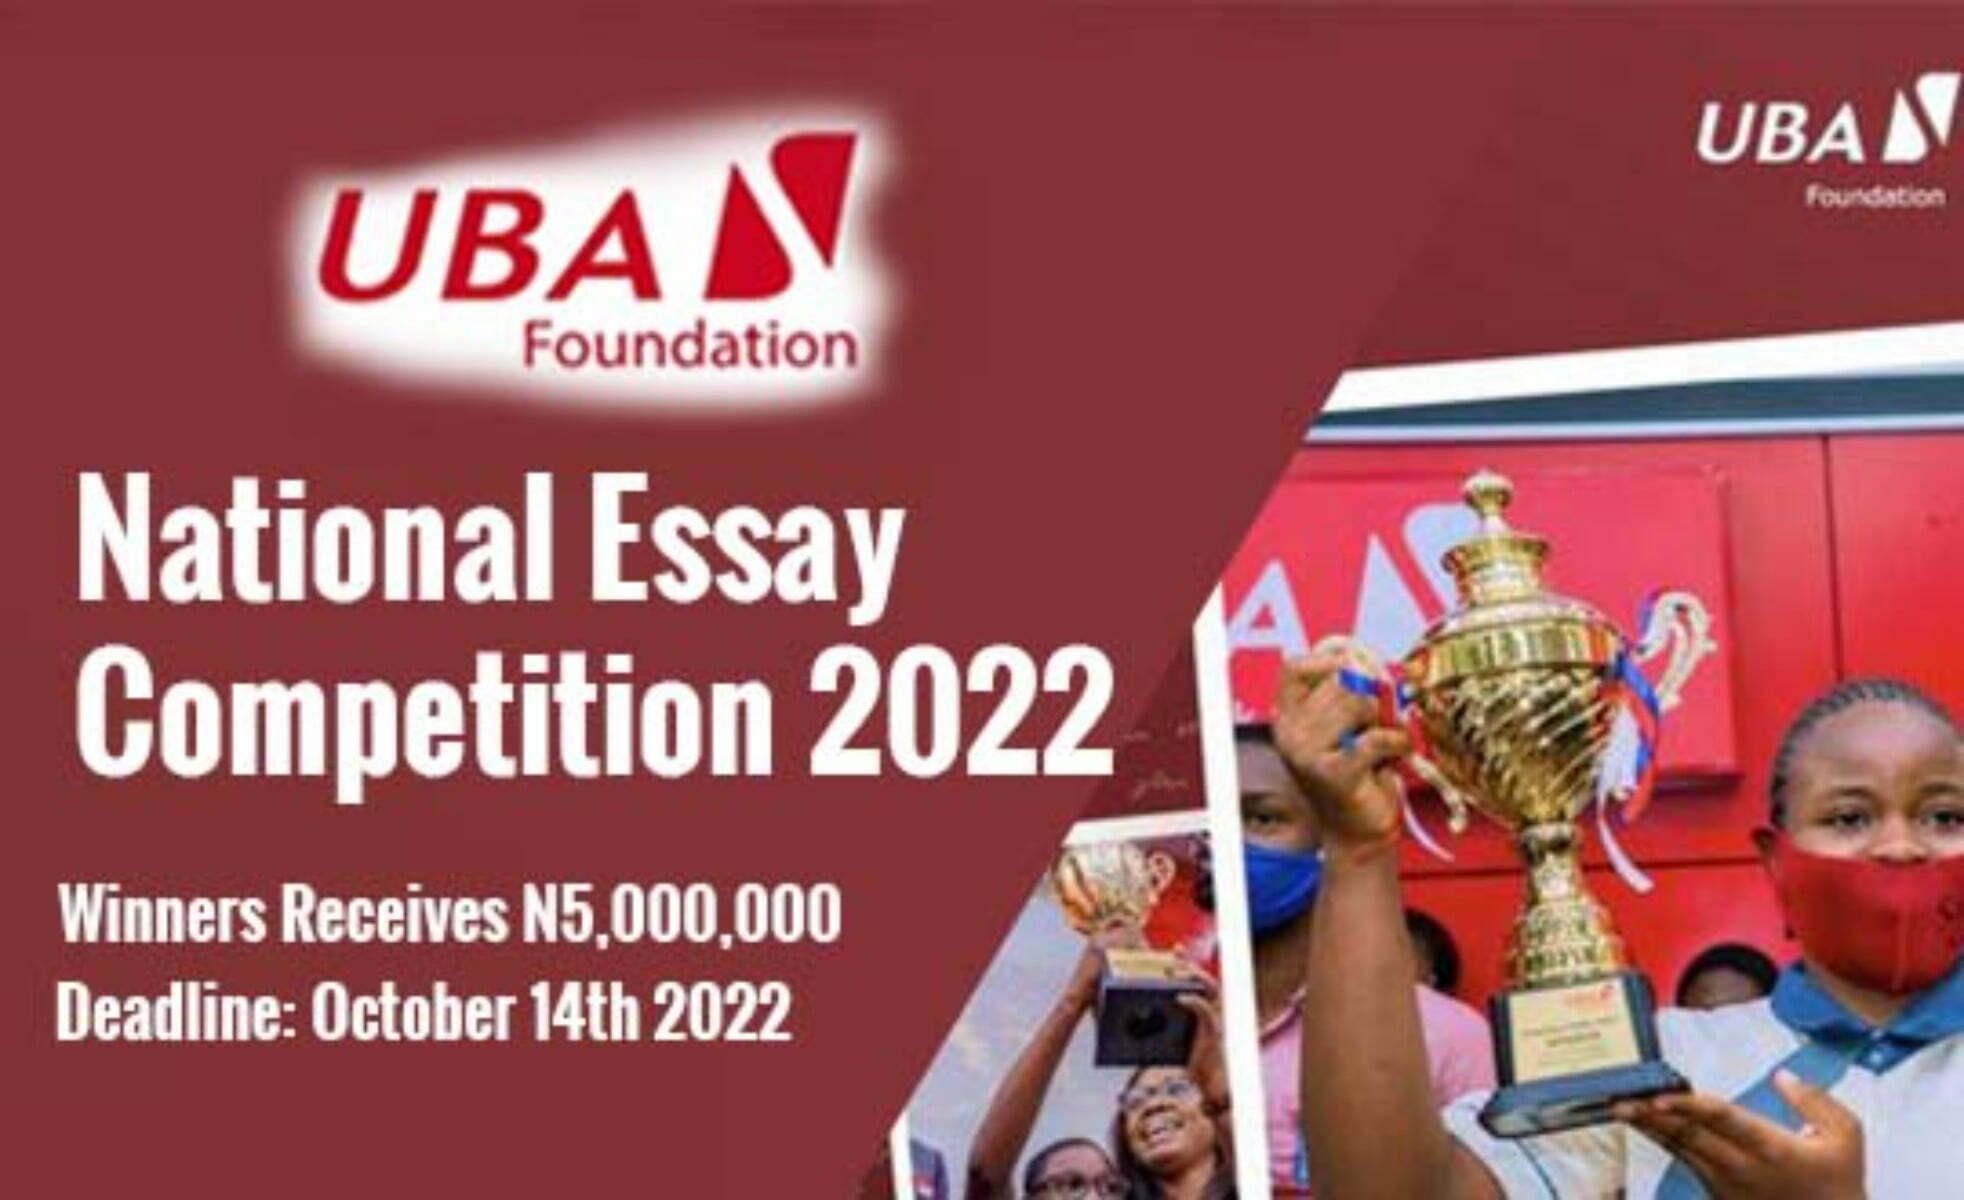 uba essay competition 2022 topic